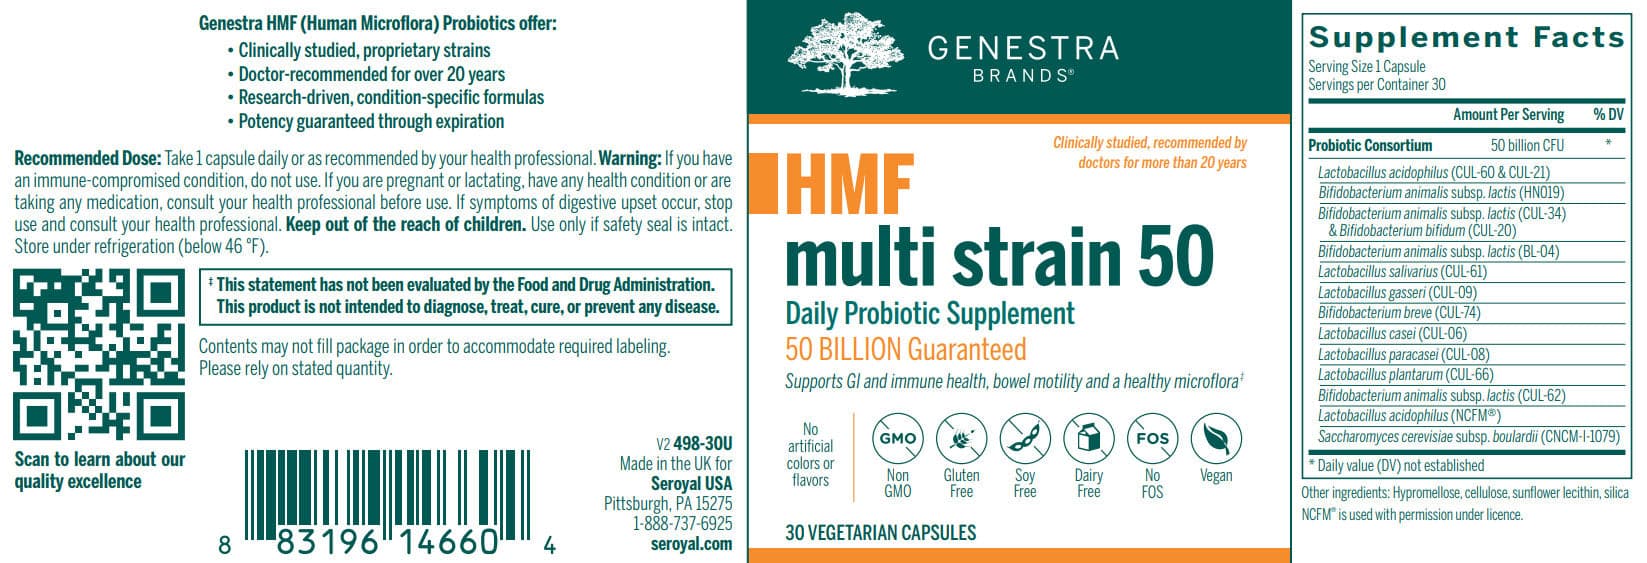 Genestra Brands HMF Multi Strain 50 Label